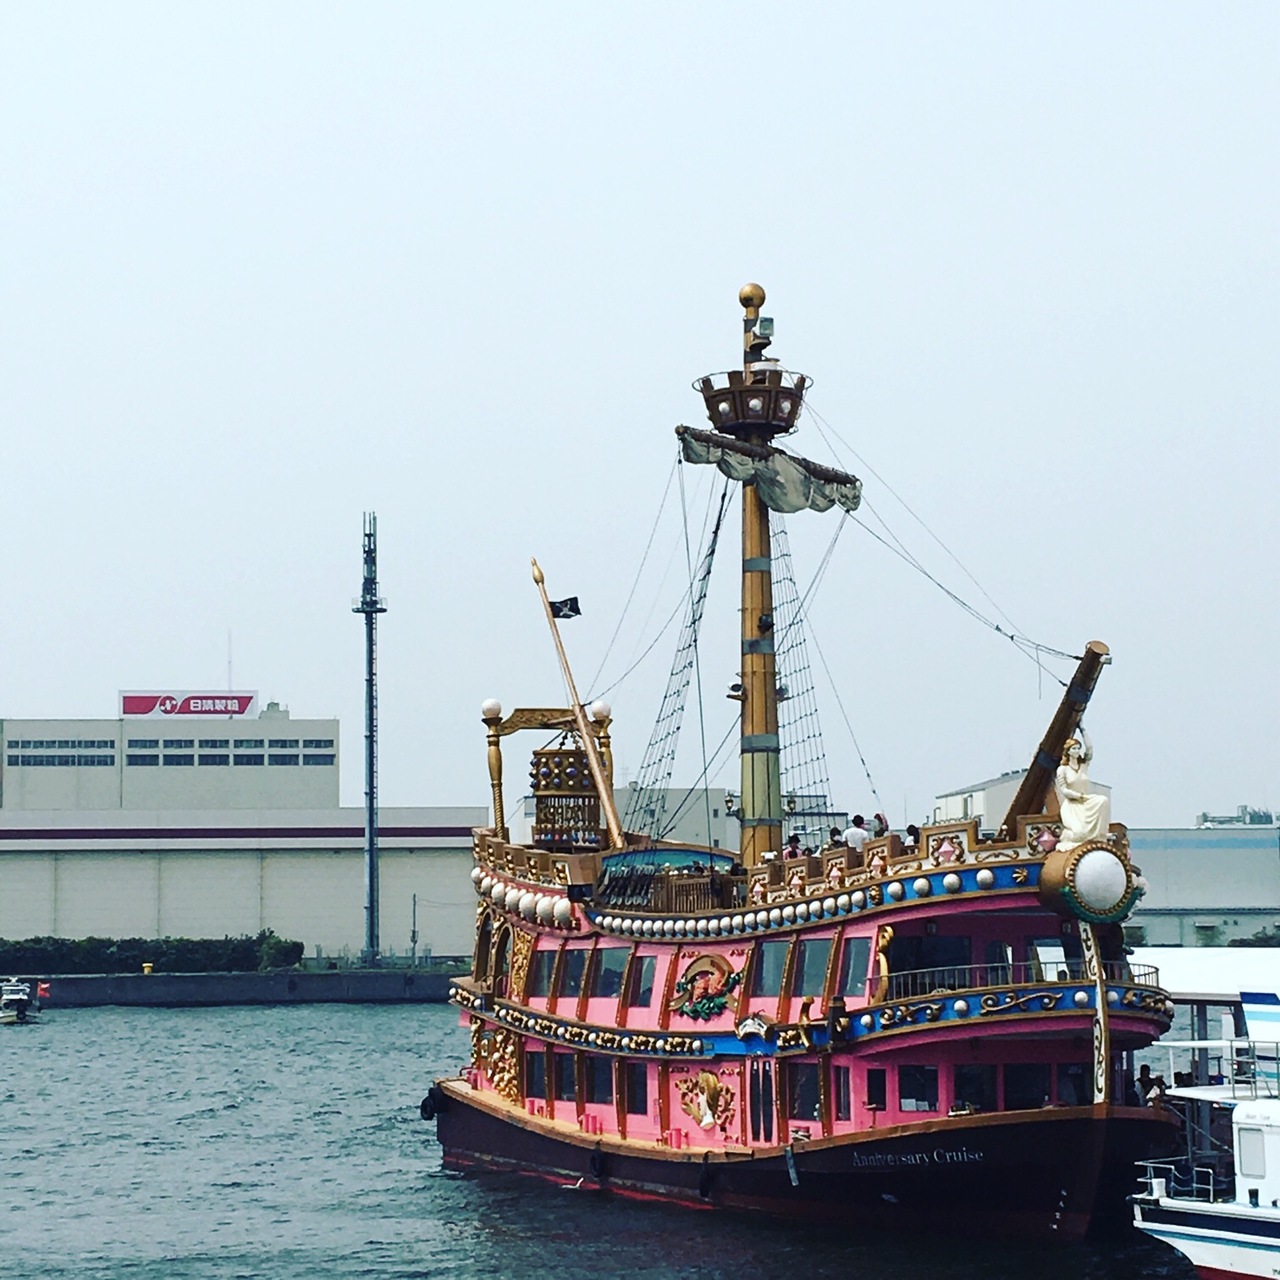 Chiba旅 千葉みなとk Sハーバーで海賊船クルーズ 千葉県の旅行記 ブログ By Kanana14さん フォートラベル